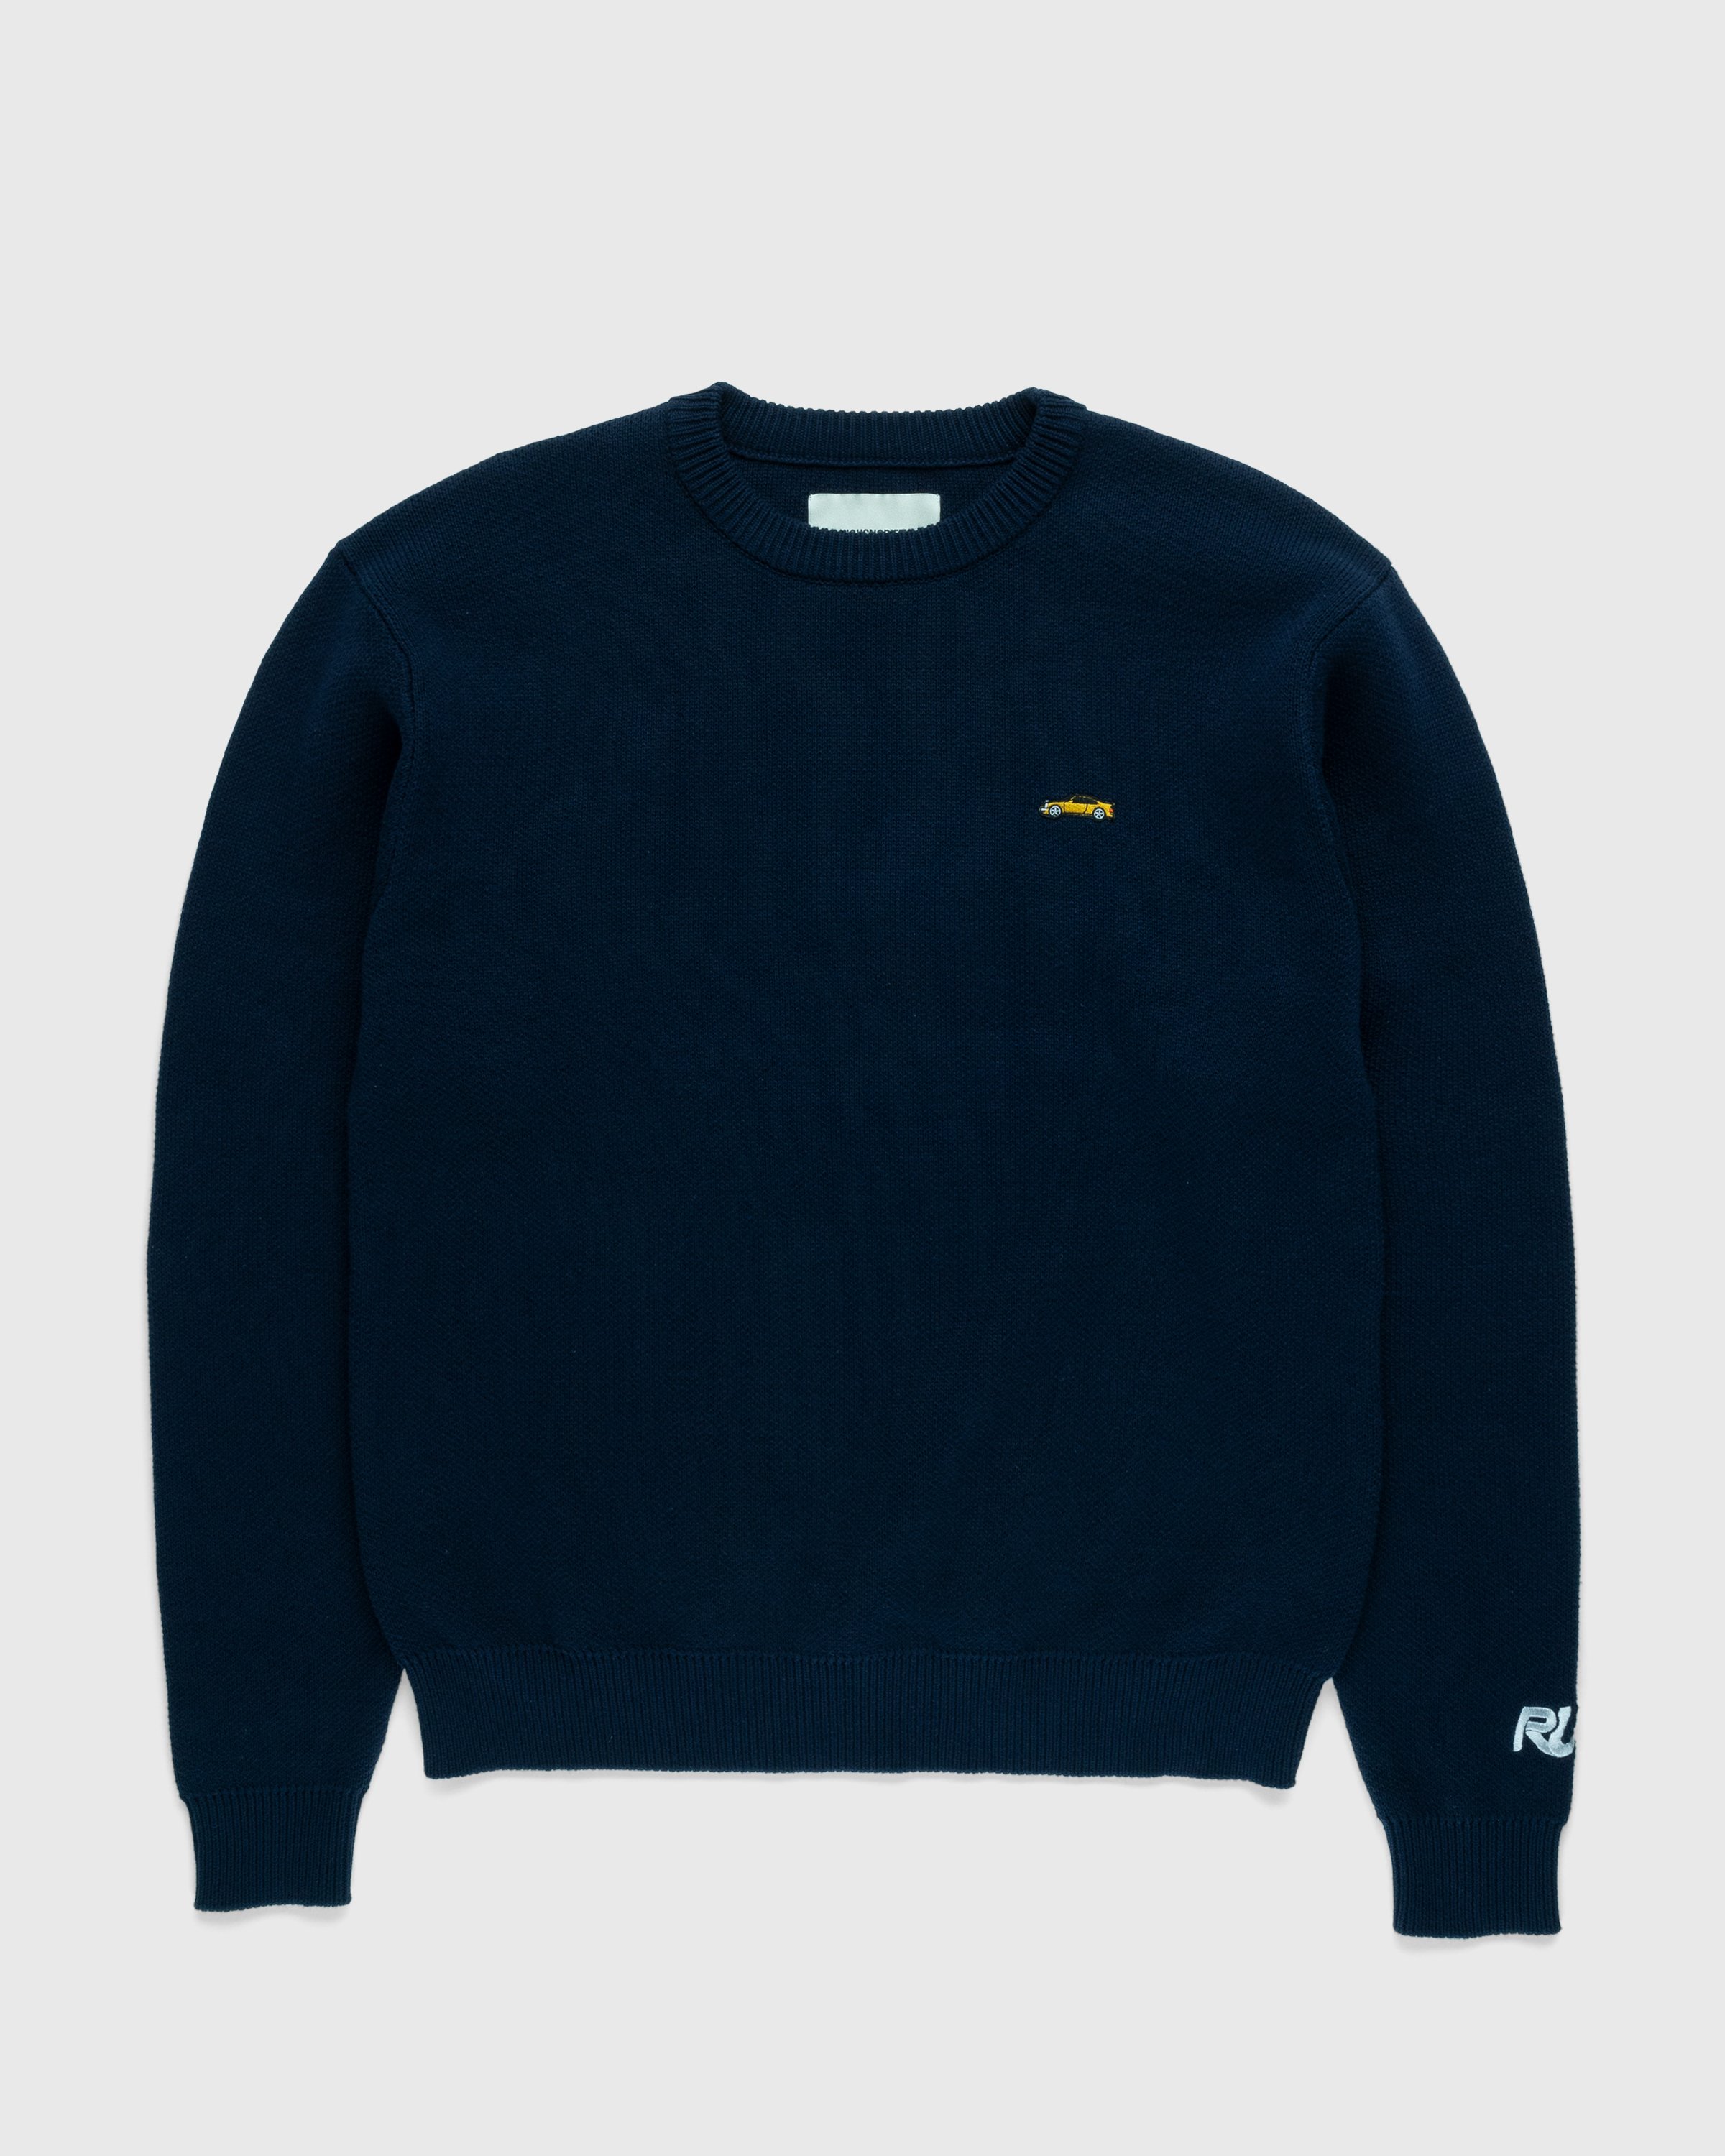 RUF x Highsnobiety - Knitted Crewneck Sweater Navy - Clothing - Blue - Image 1